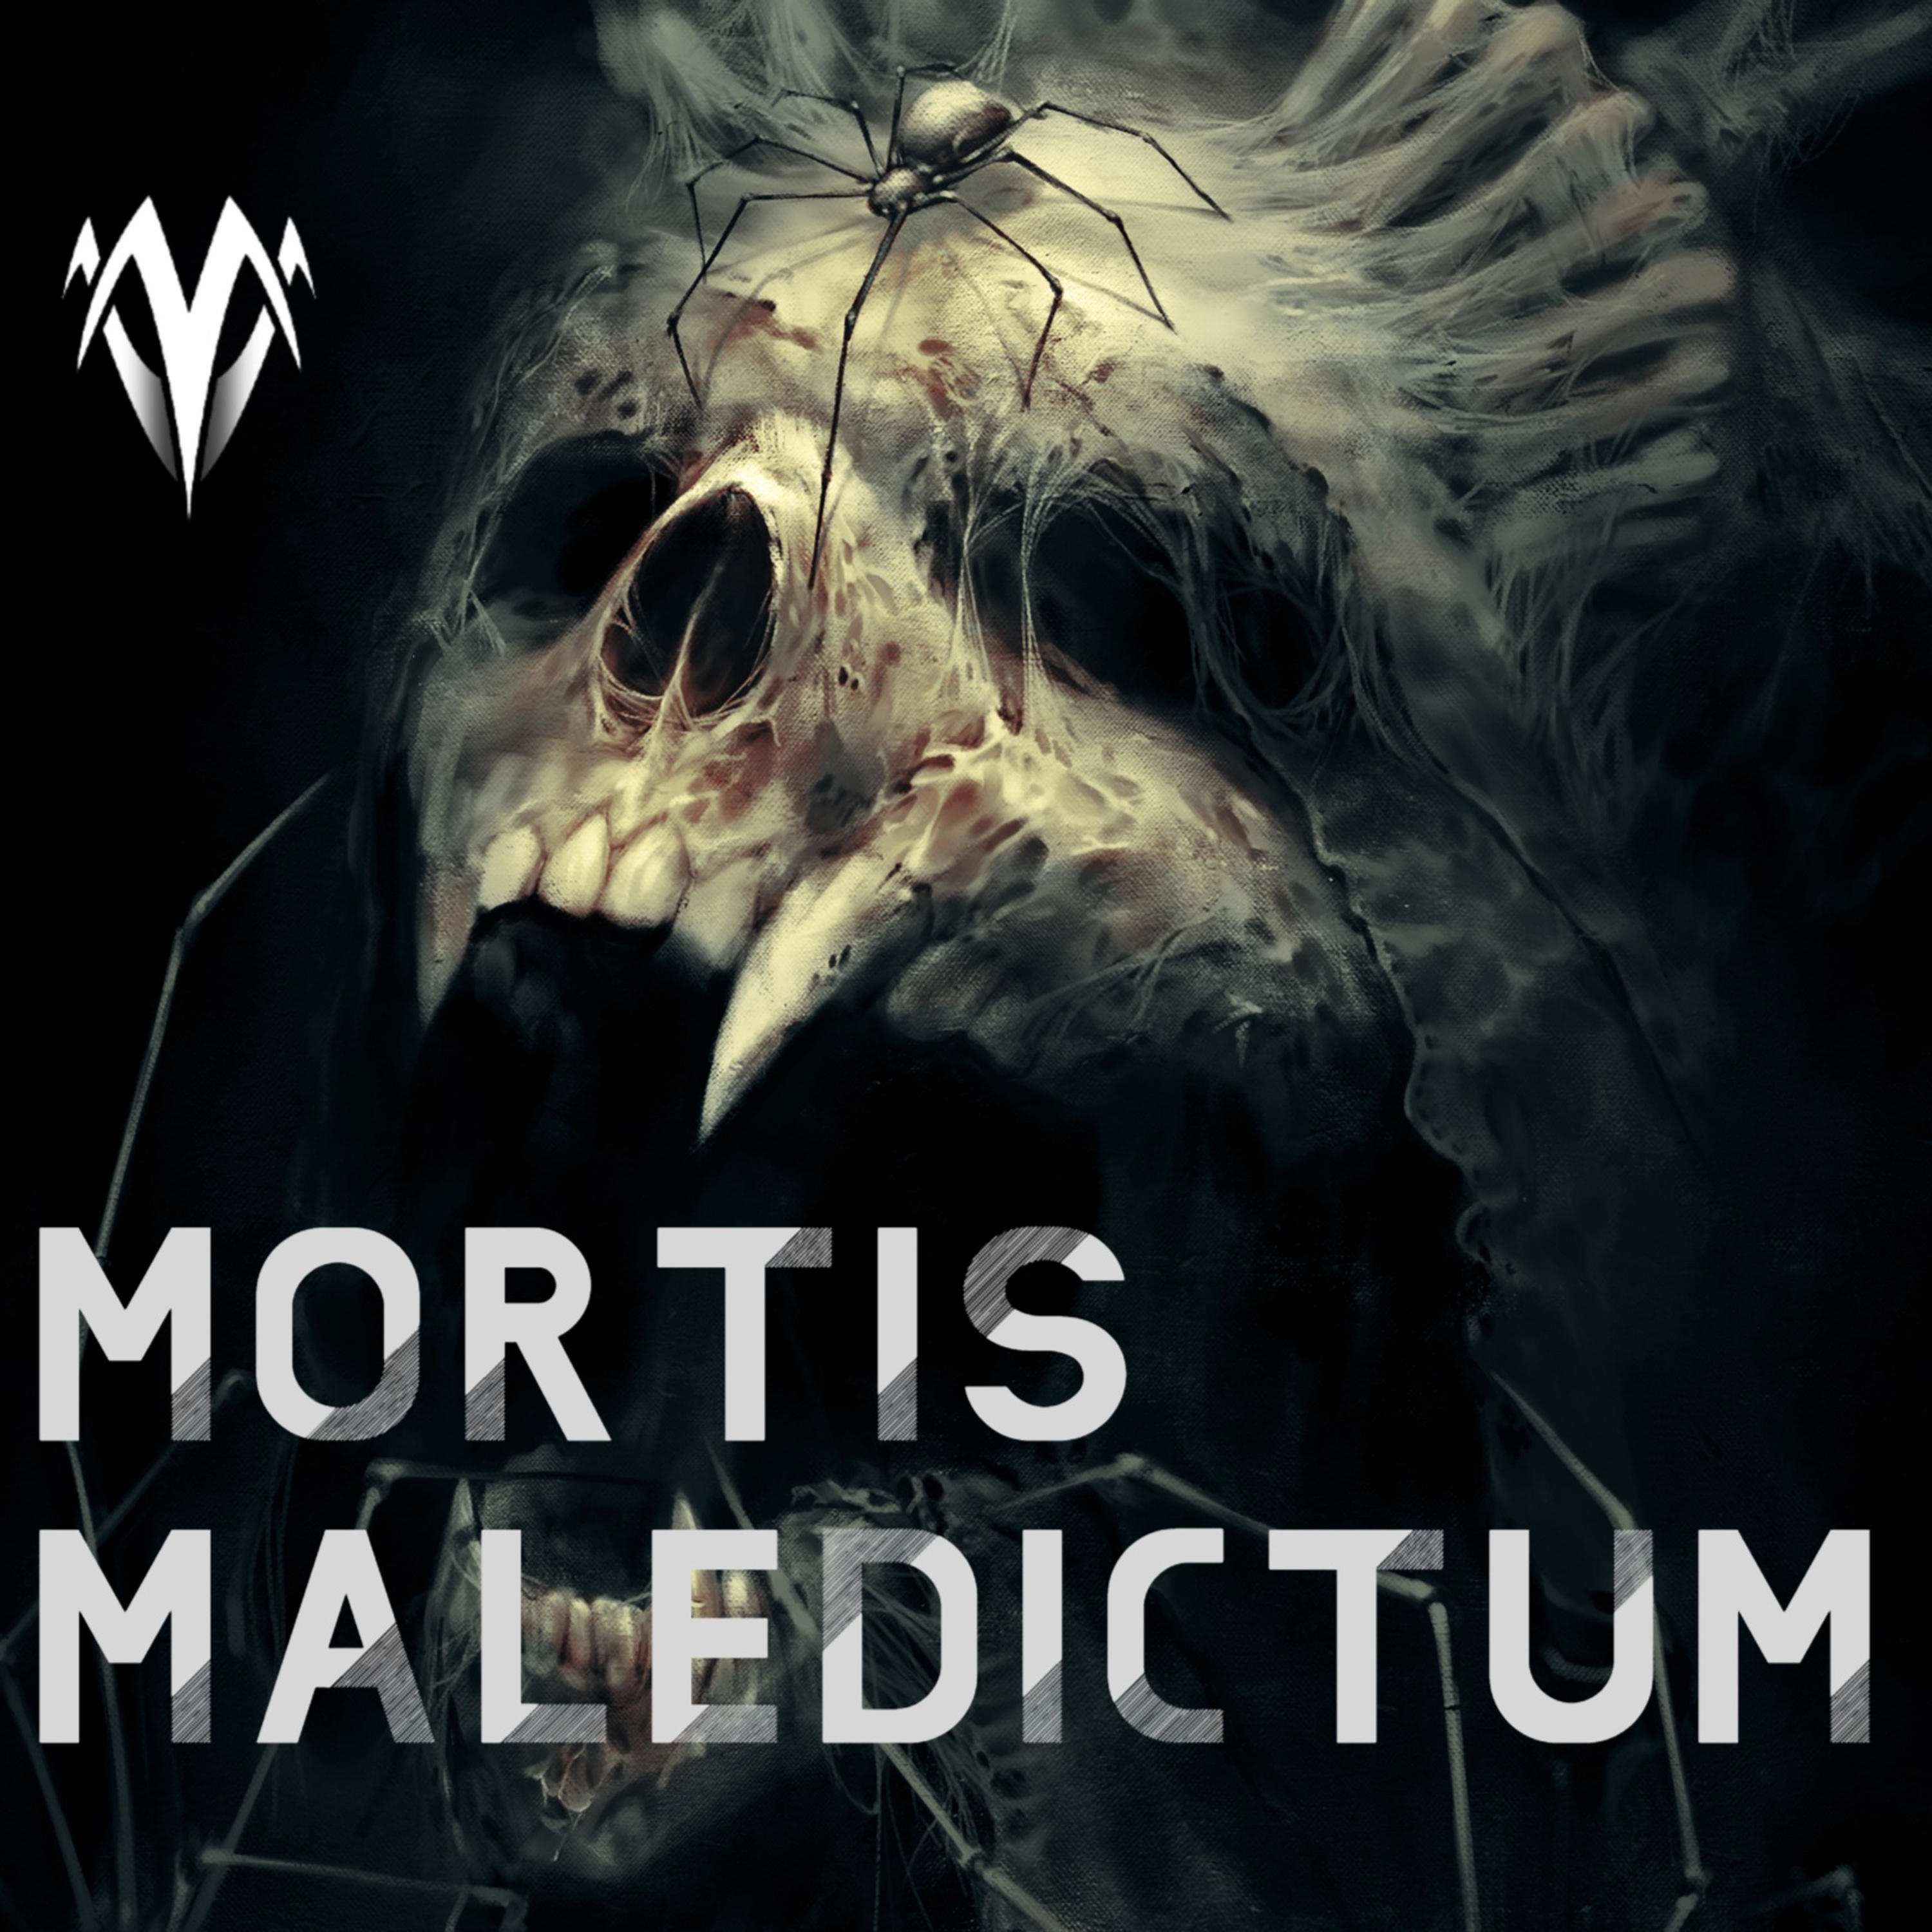 Mortis Maledictum - Dark Fantasy and Cosmic Horror Stories